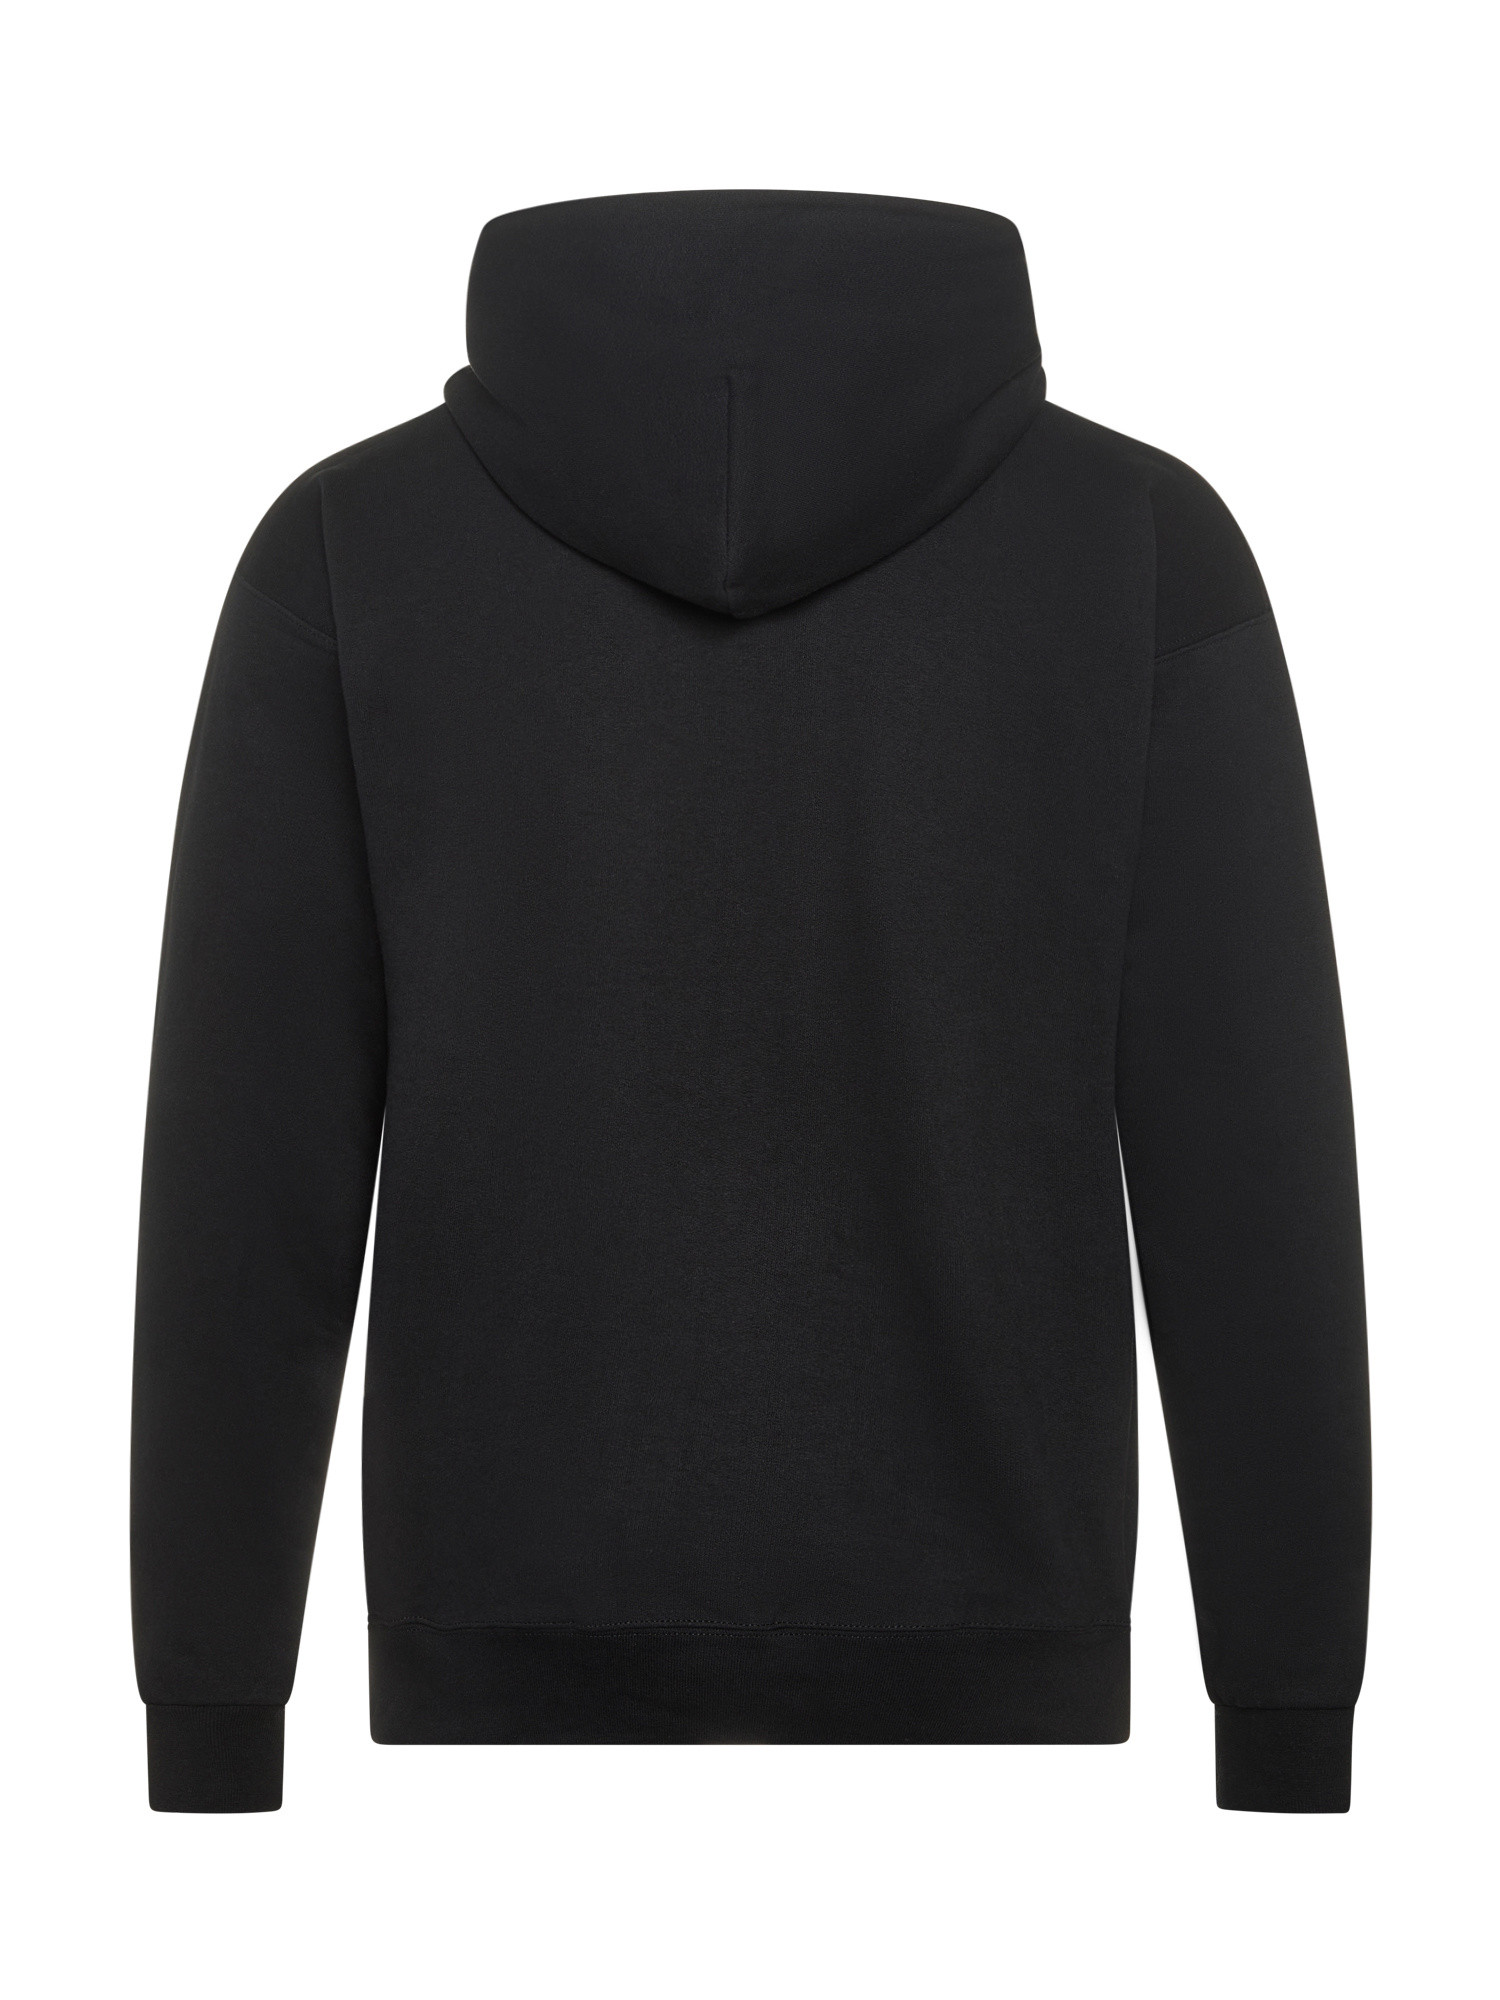 Thrasher - Skate magazine logo hoodie, Black, large image number 1